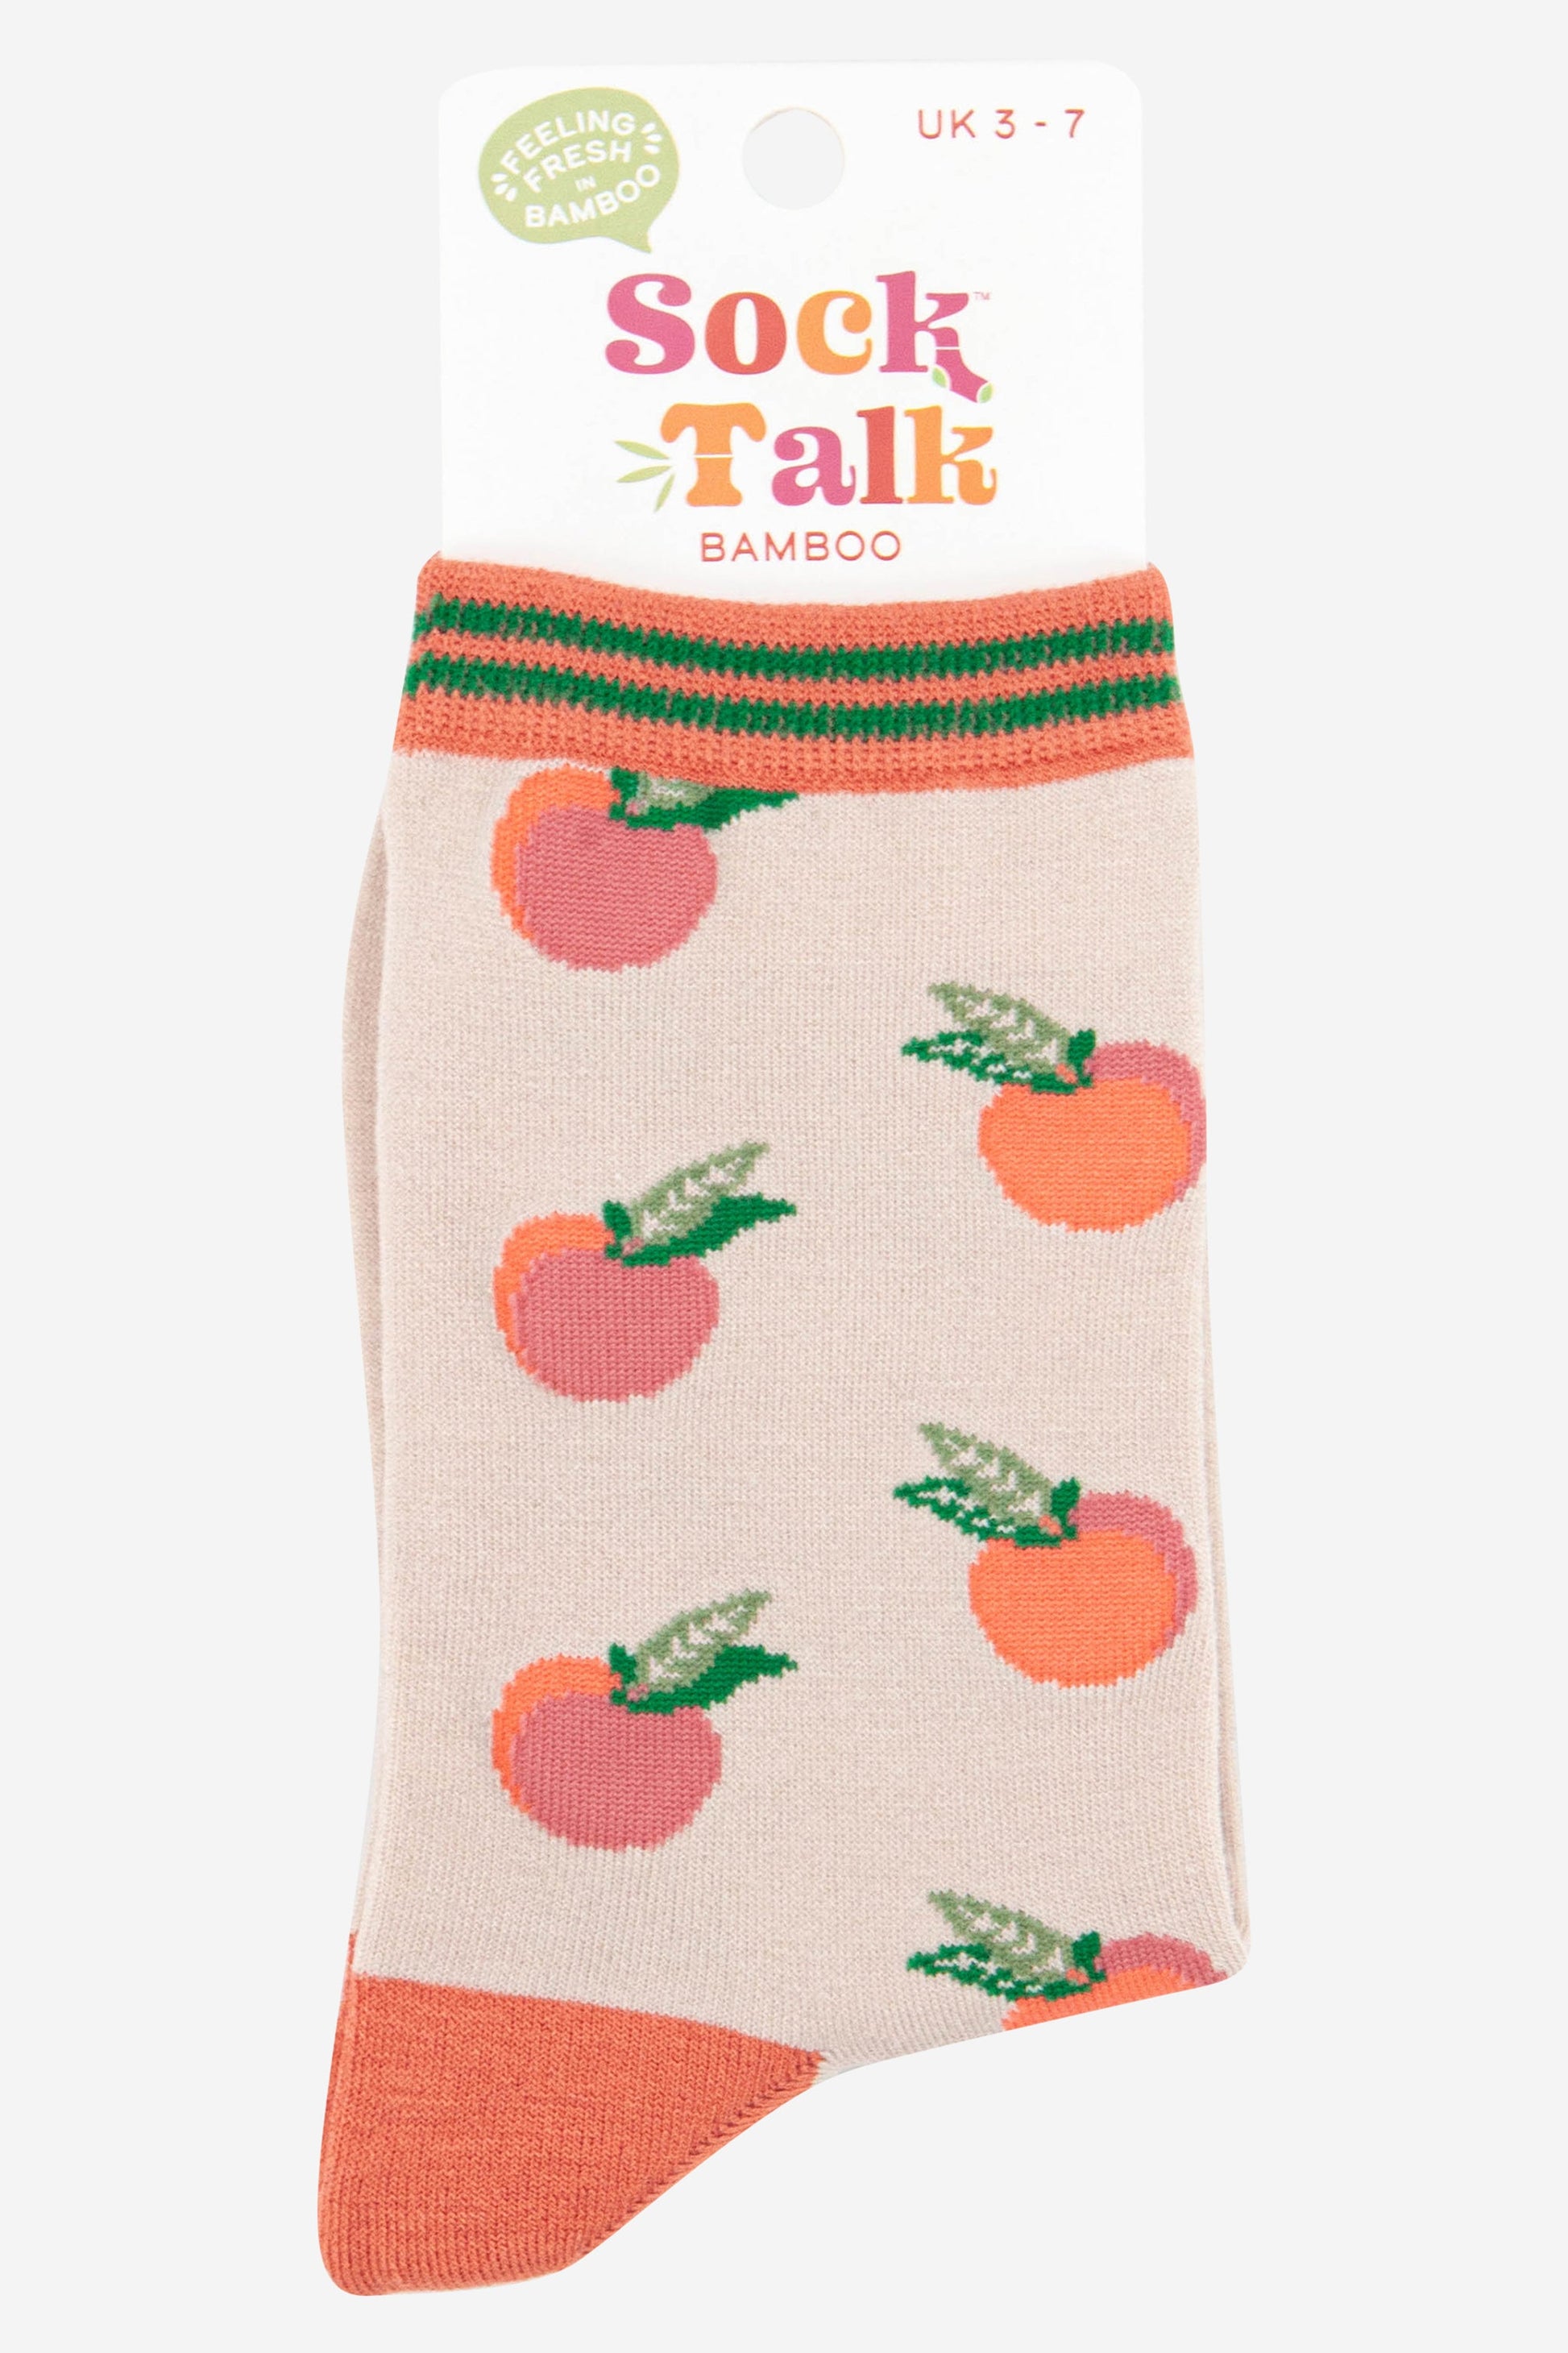 womens bamboo peach fruit socks uk size 3-7